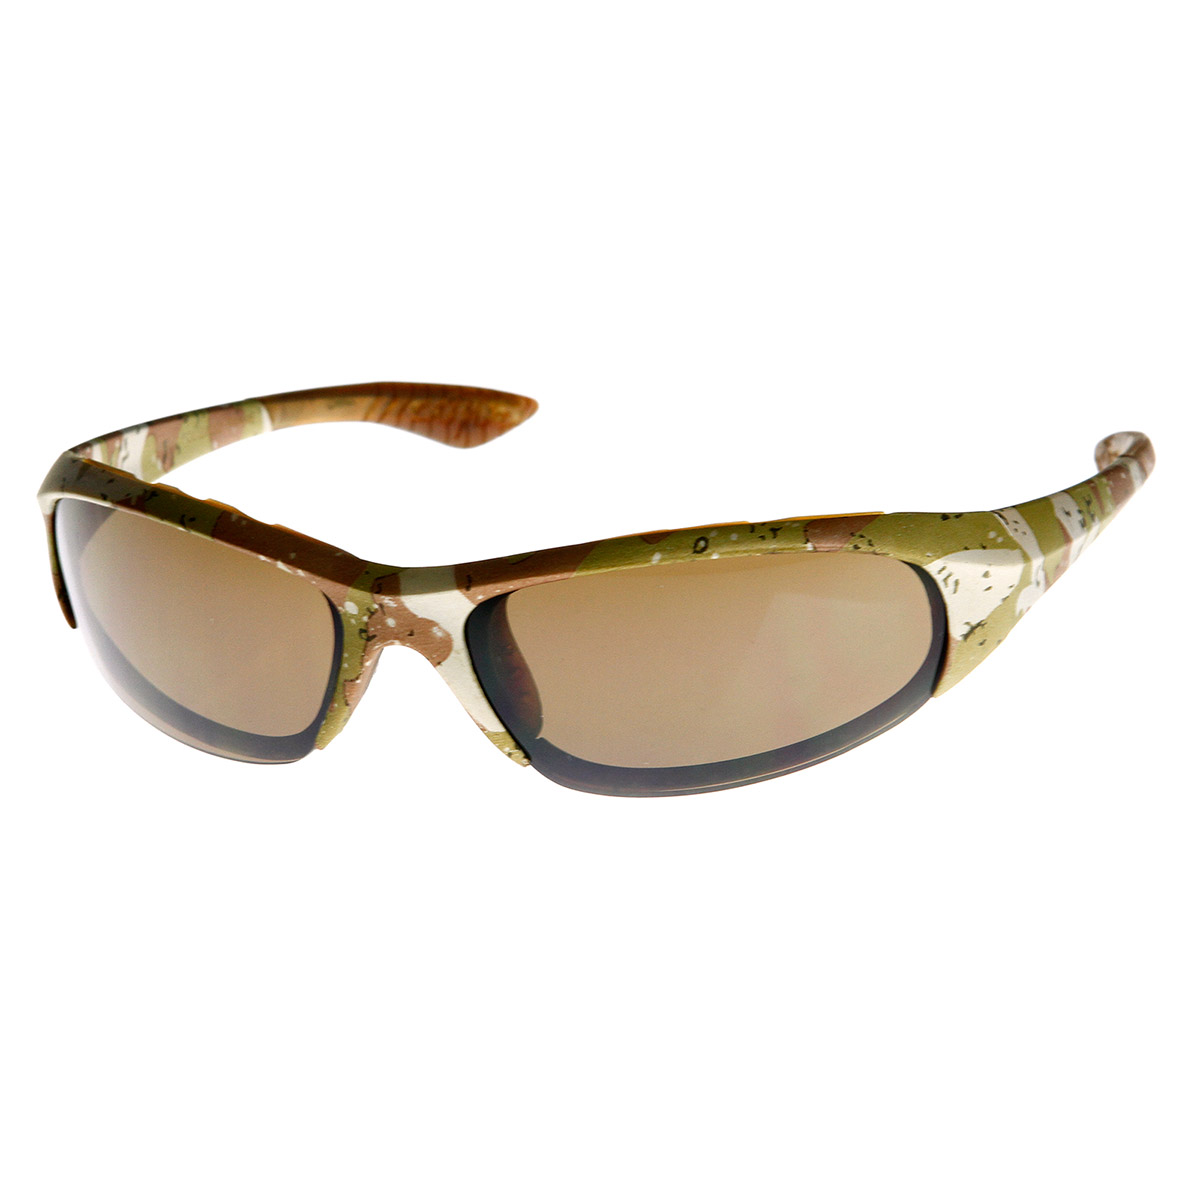 Army Sunglasses Ebay